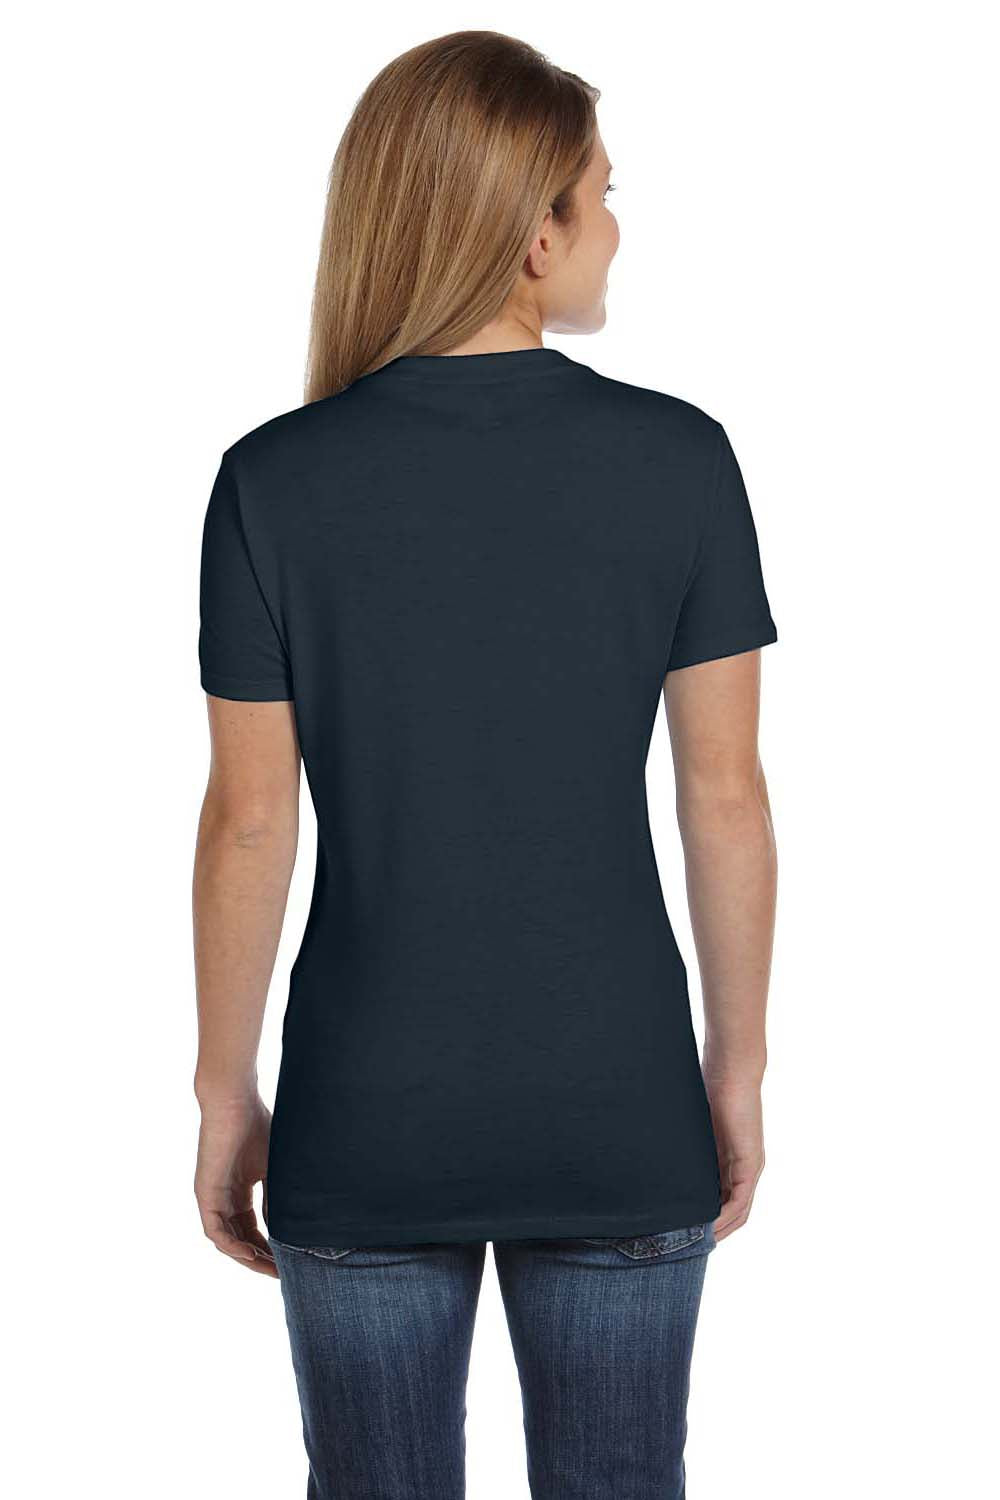 Hanes S04V Womens Nano-T Short Sleeve V-Neck T-Shirt Vintage Black Back